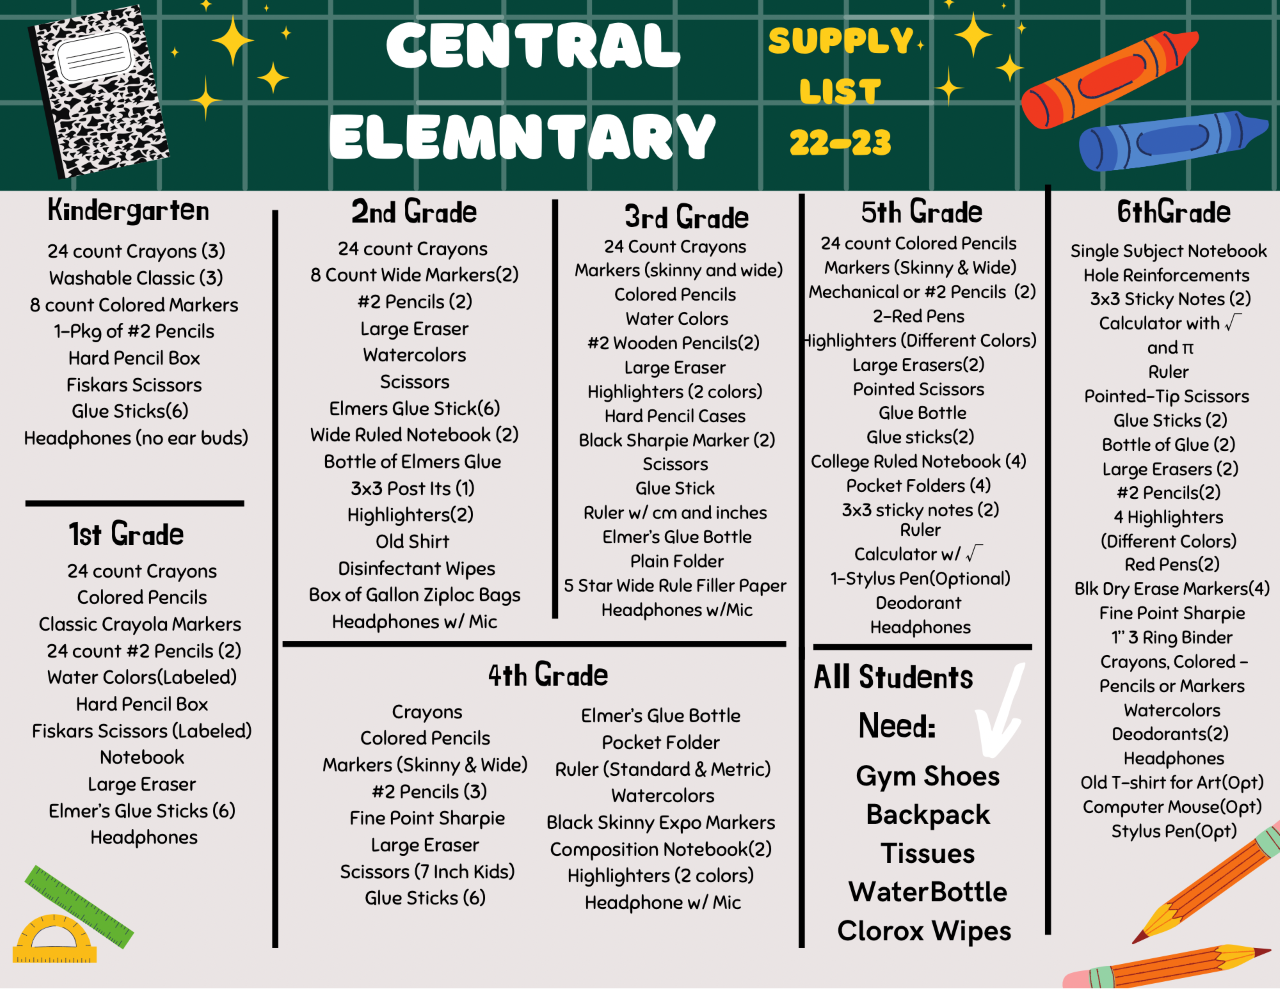 Elementary School Supply List 22-23